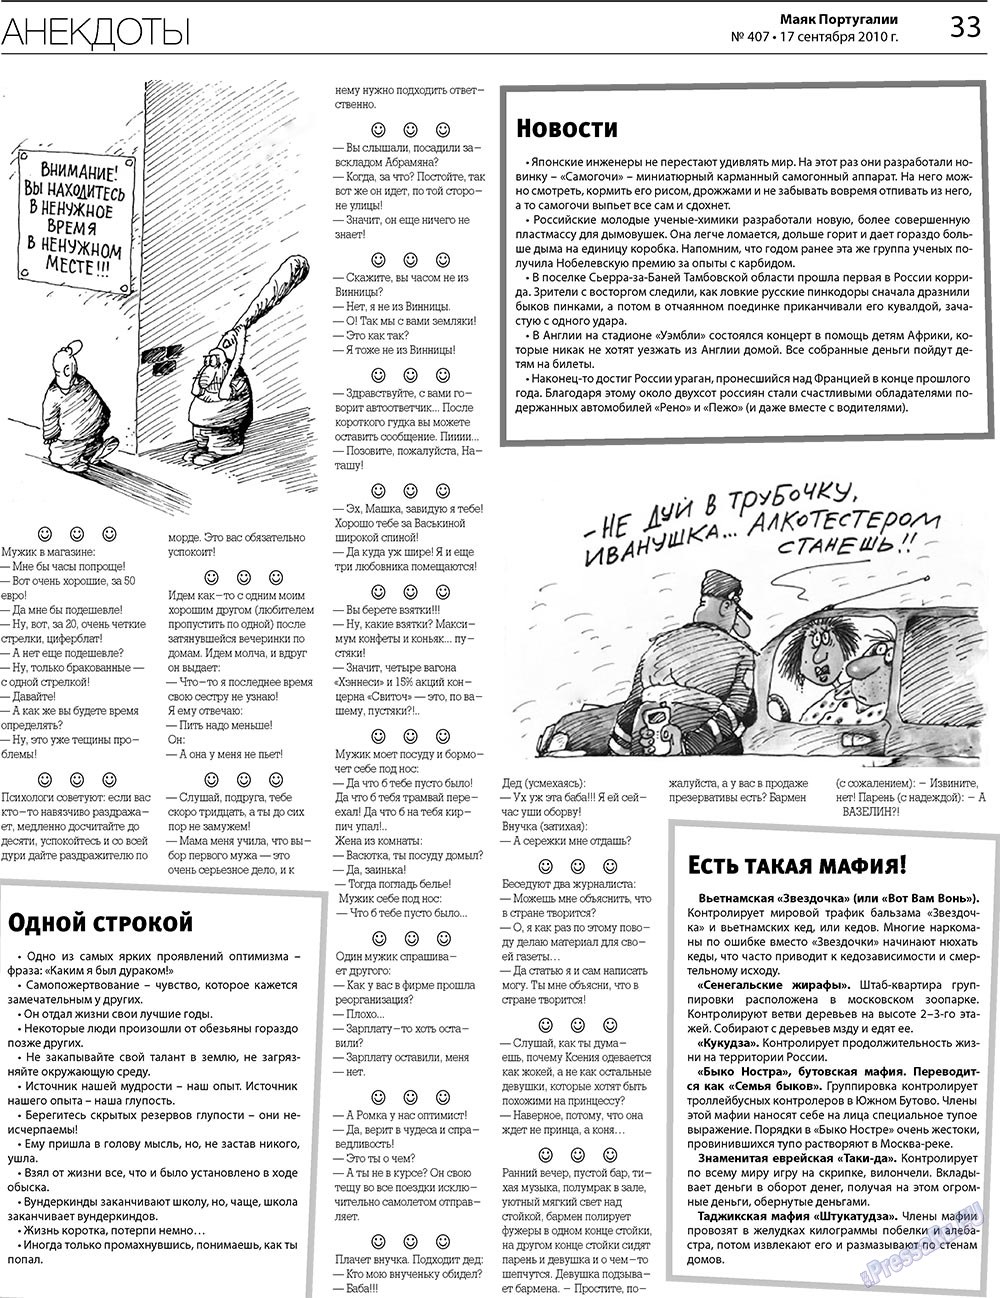 Маяк Португалии, газета. 2010 №407 стр.33